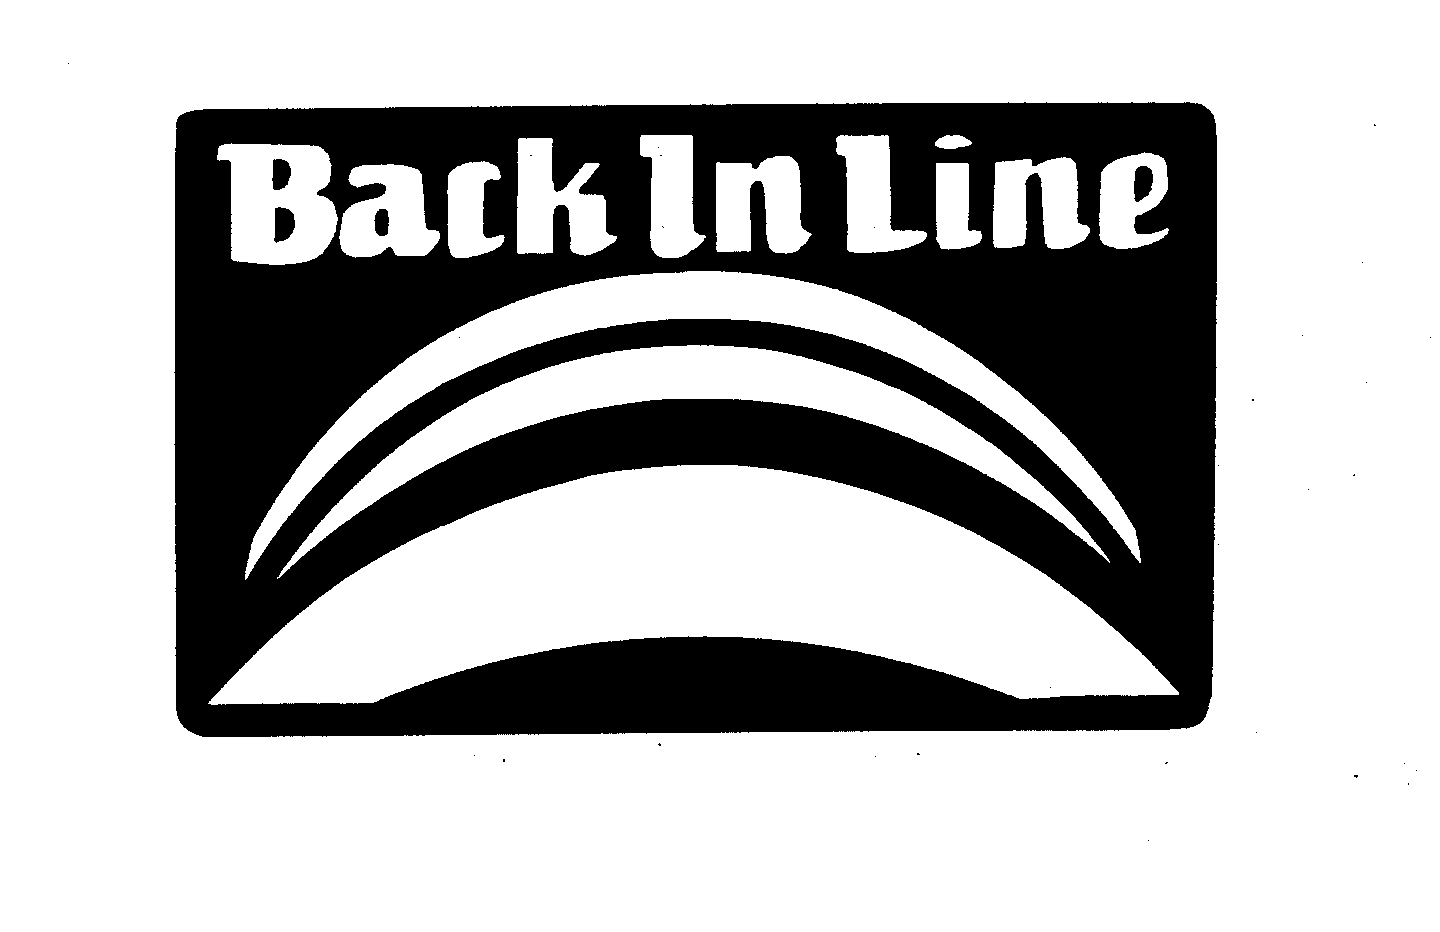  BACK IN LINE